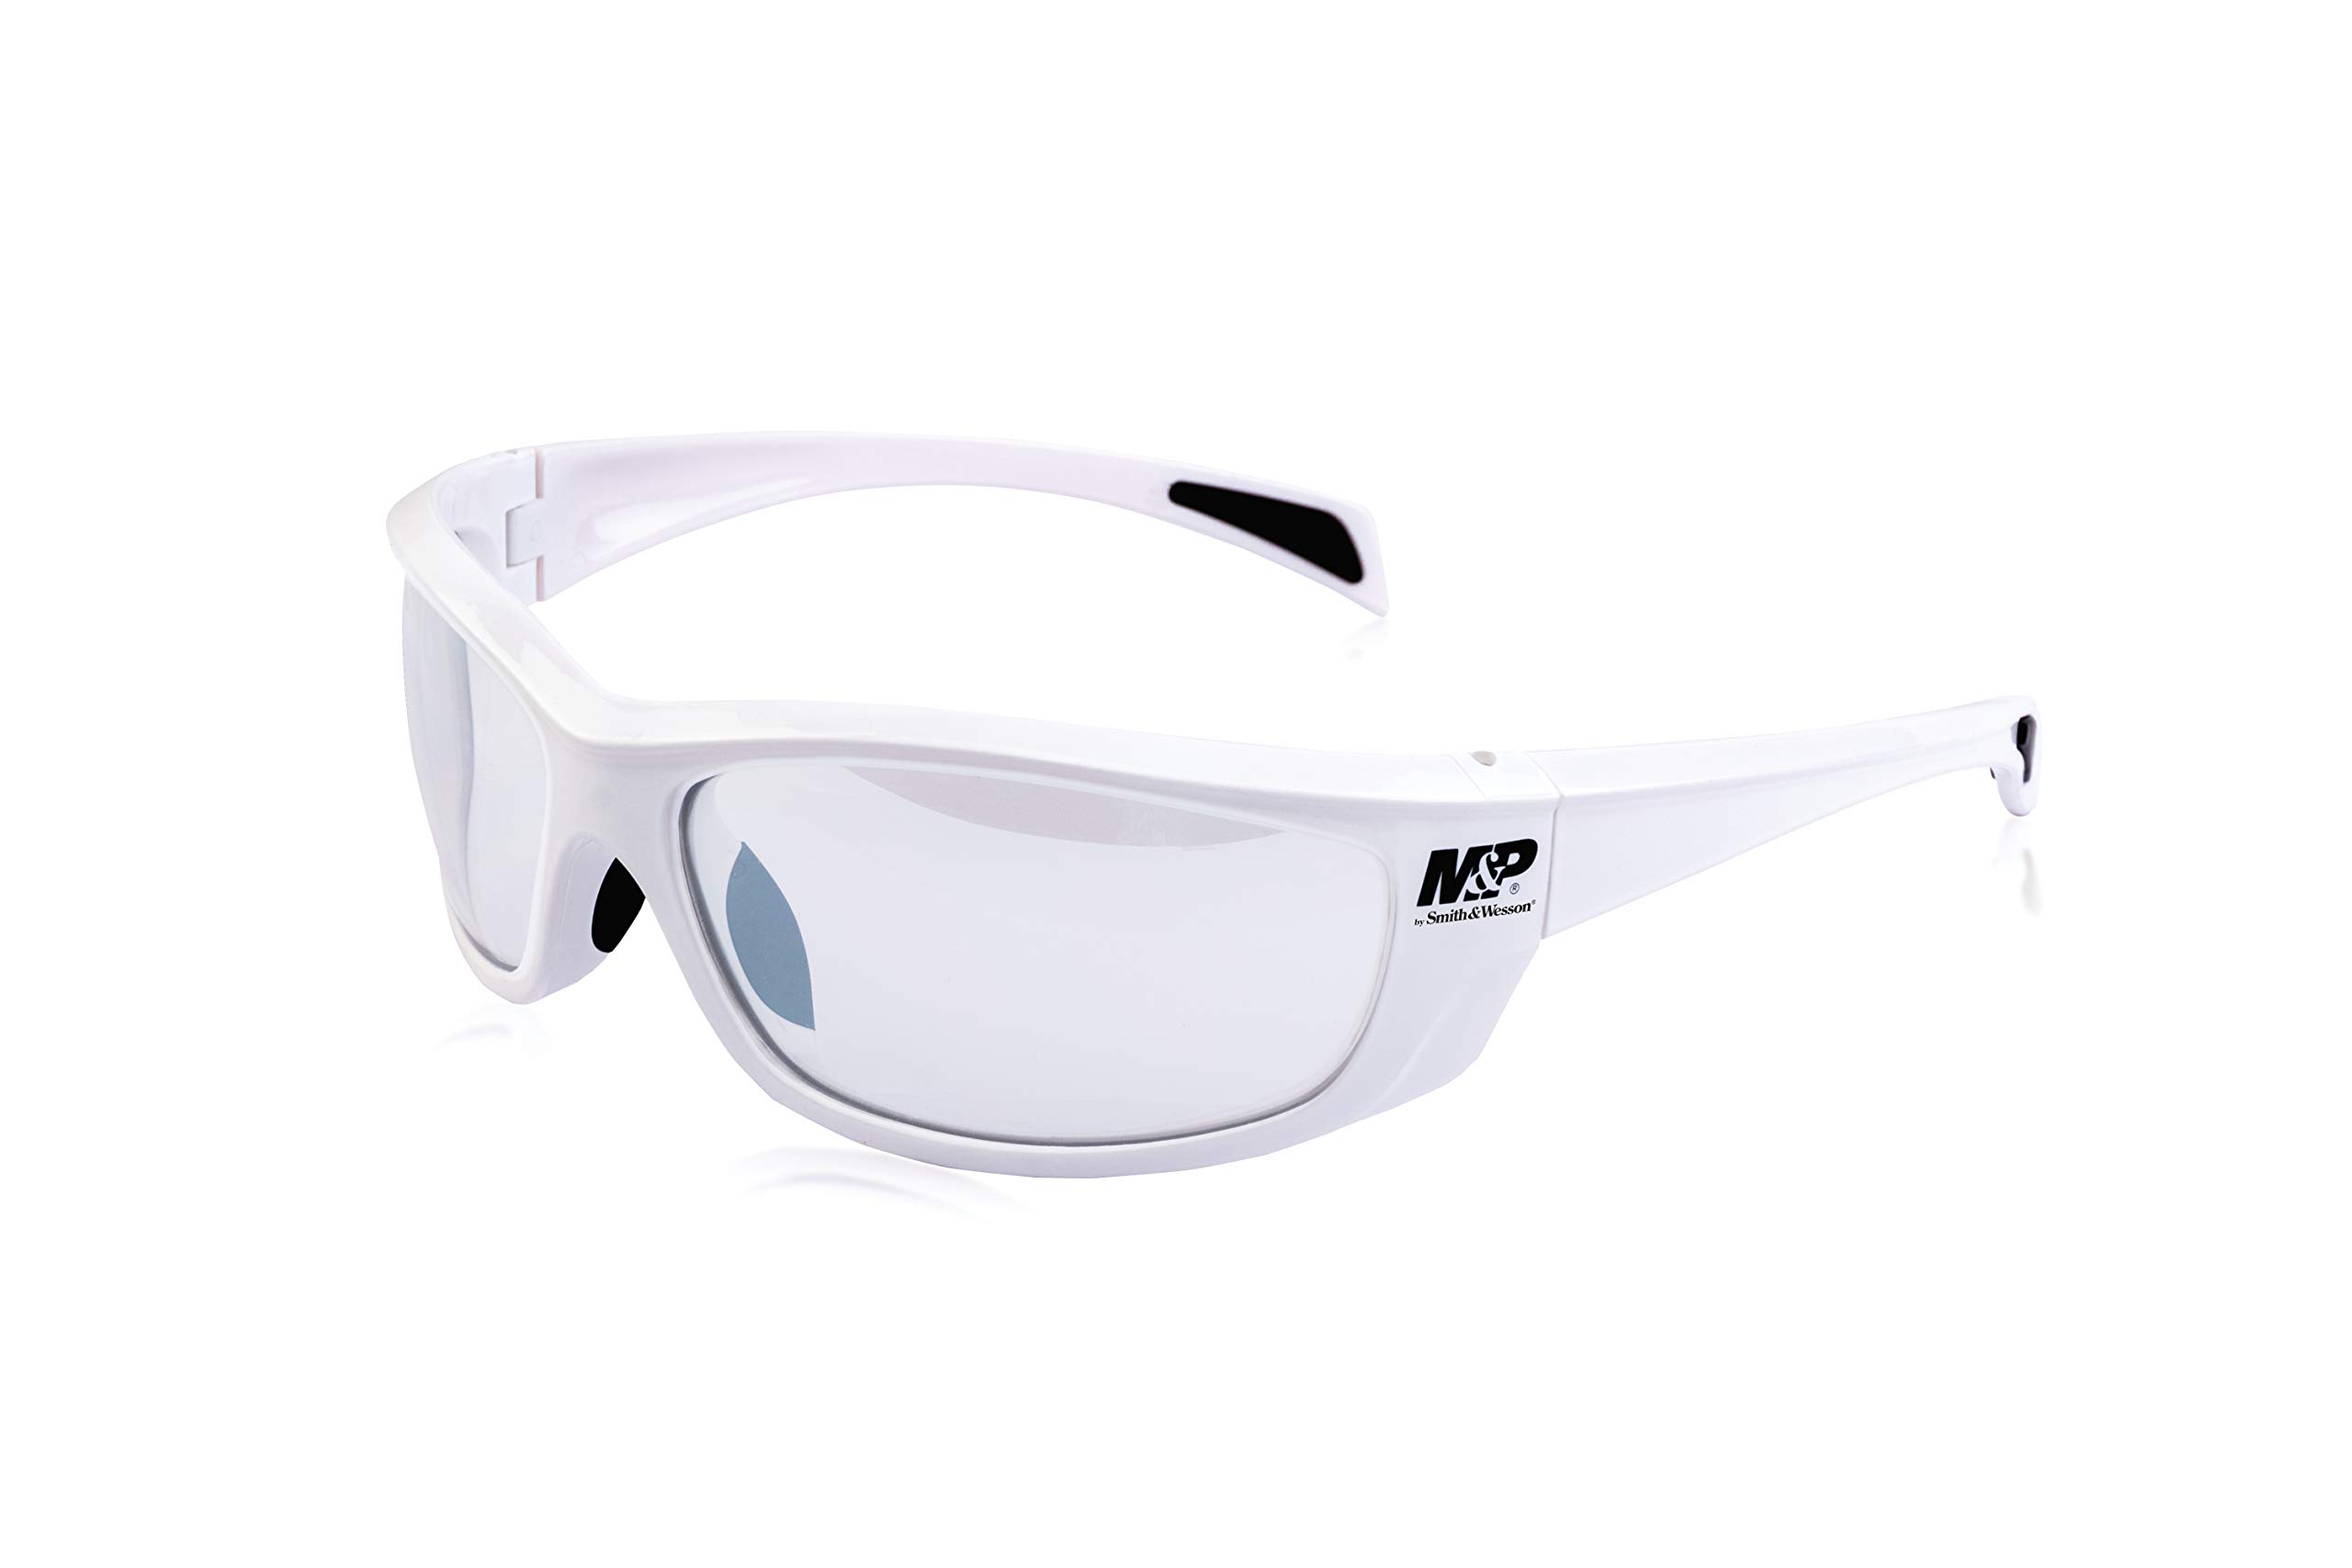 M&P Accessories 1108265-SSI Whitehawk Full Farm Schießbrille, glänzend, Weiß/Transparent – Multi, N/A